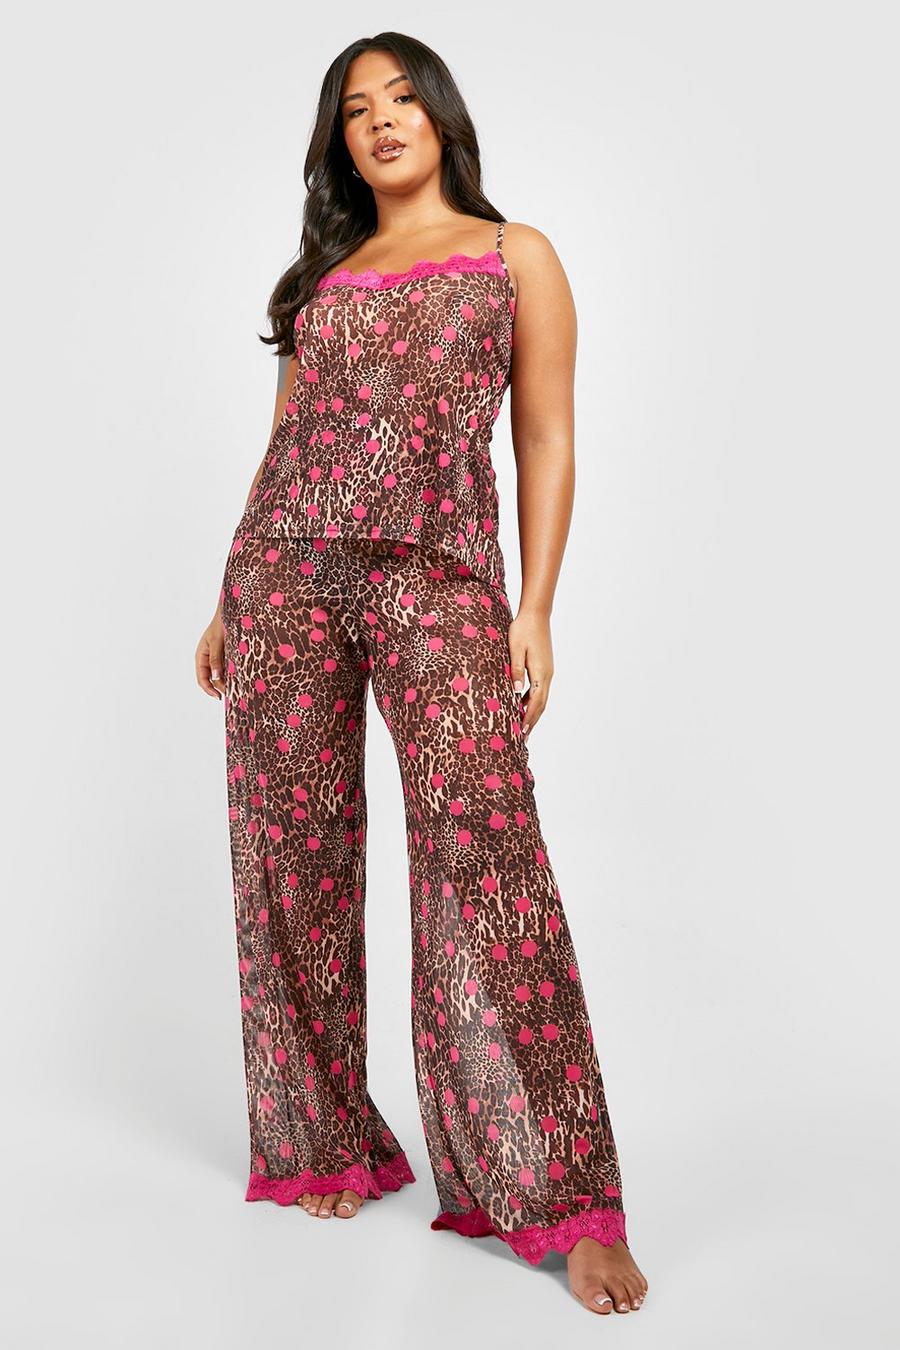 Brown braun Plus Leopard Print Polka Dot Lace Trim Cami Top & Trousers Pyjama Set